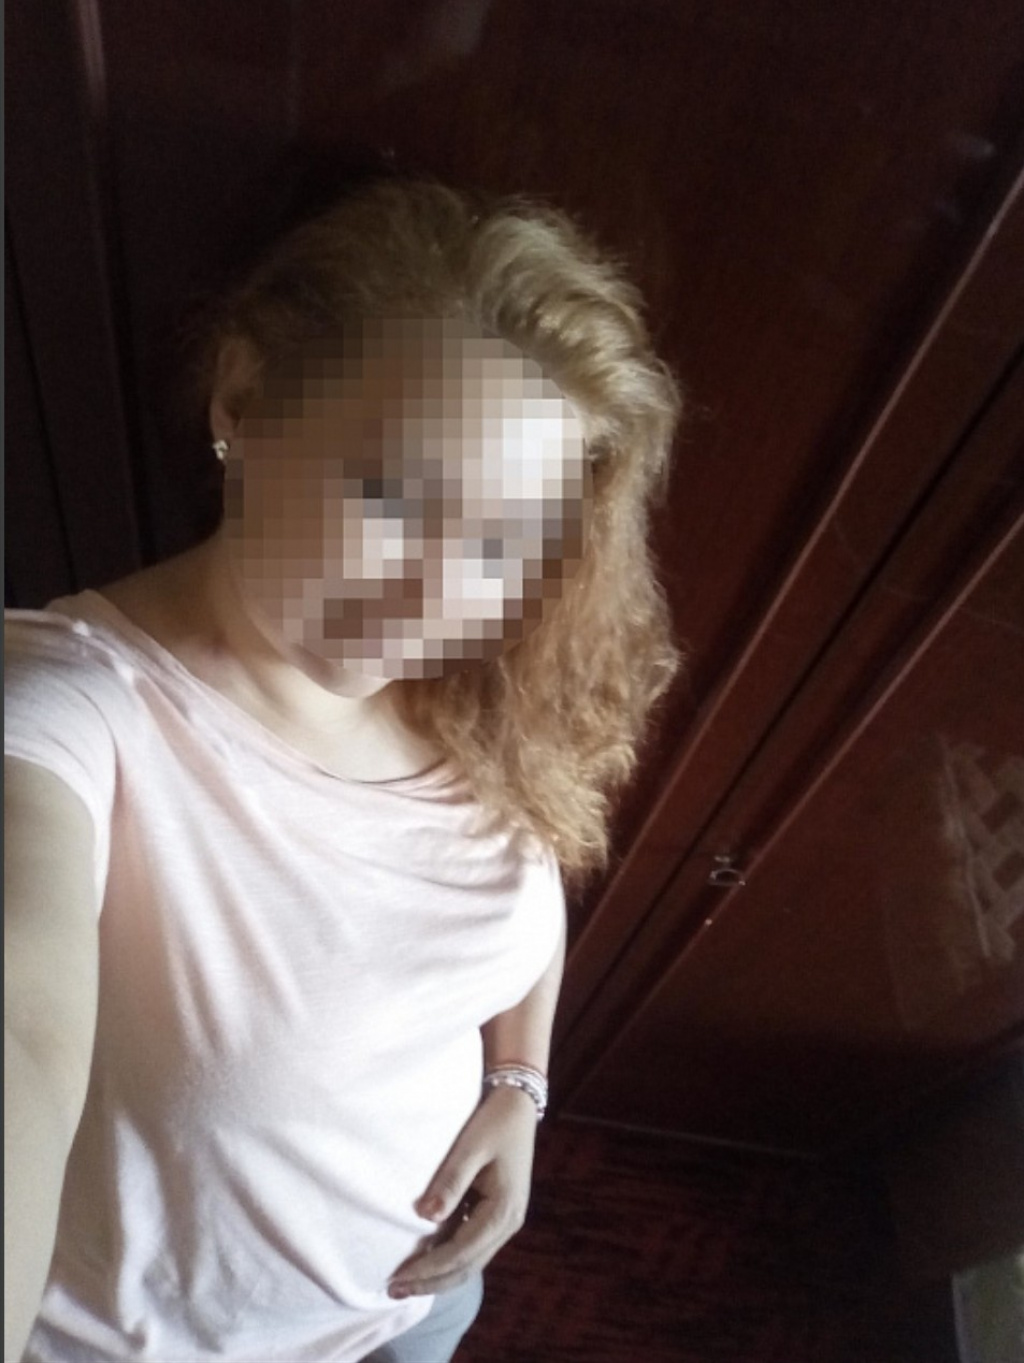 Геля: Проститутка-индивидуалка в Самаре